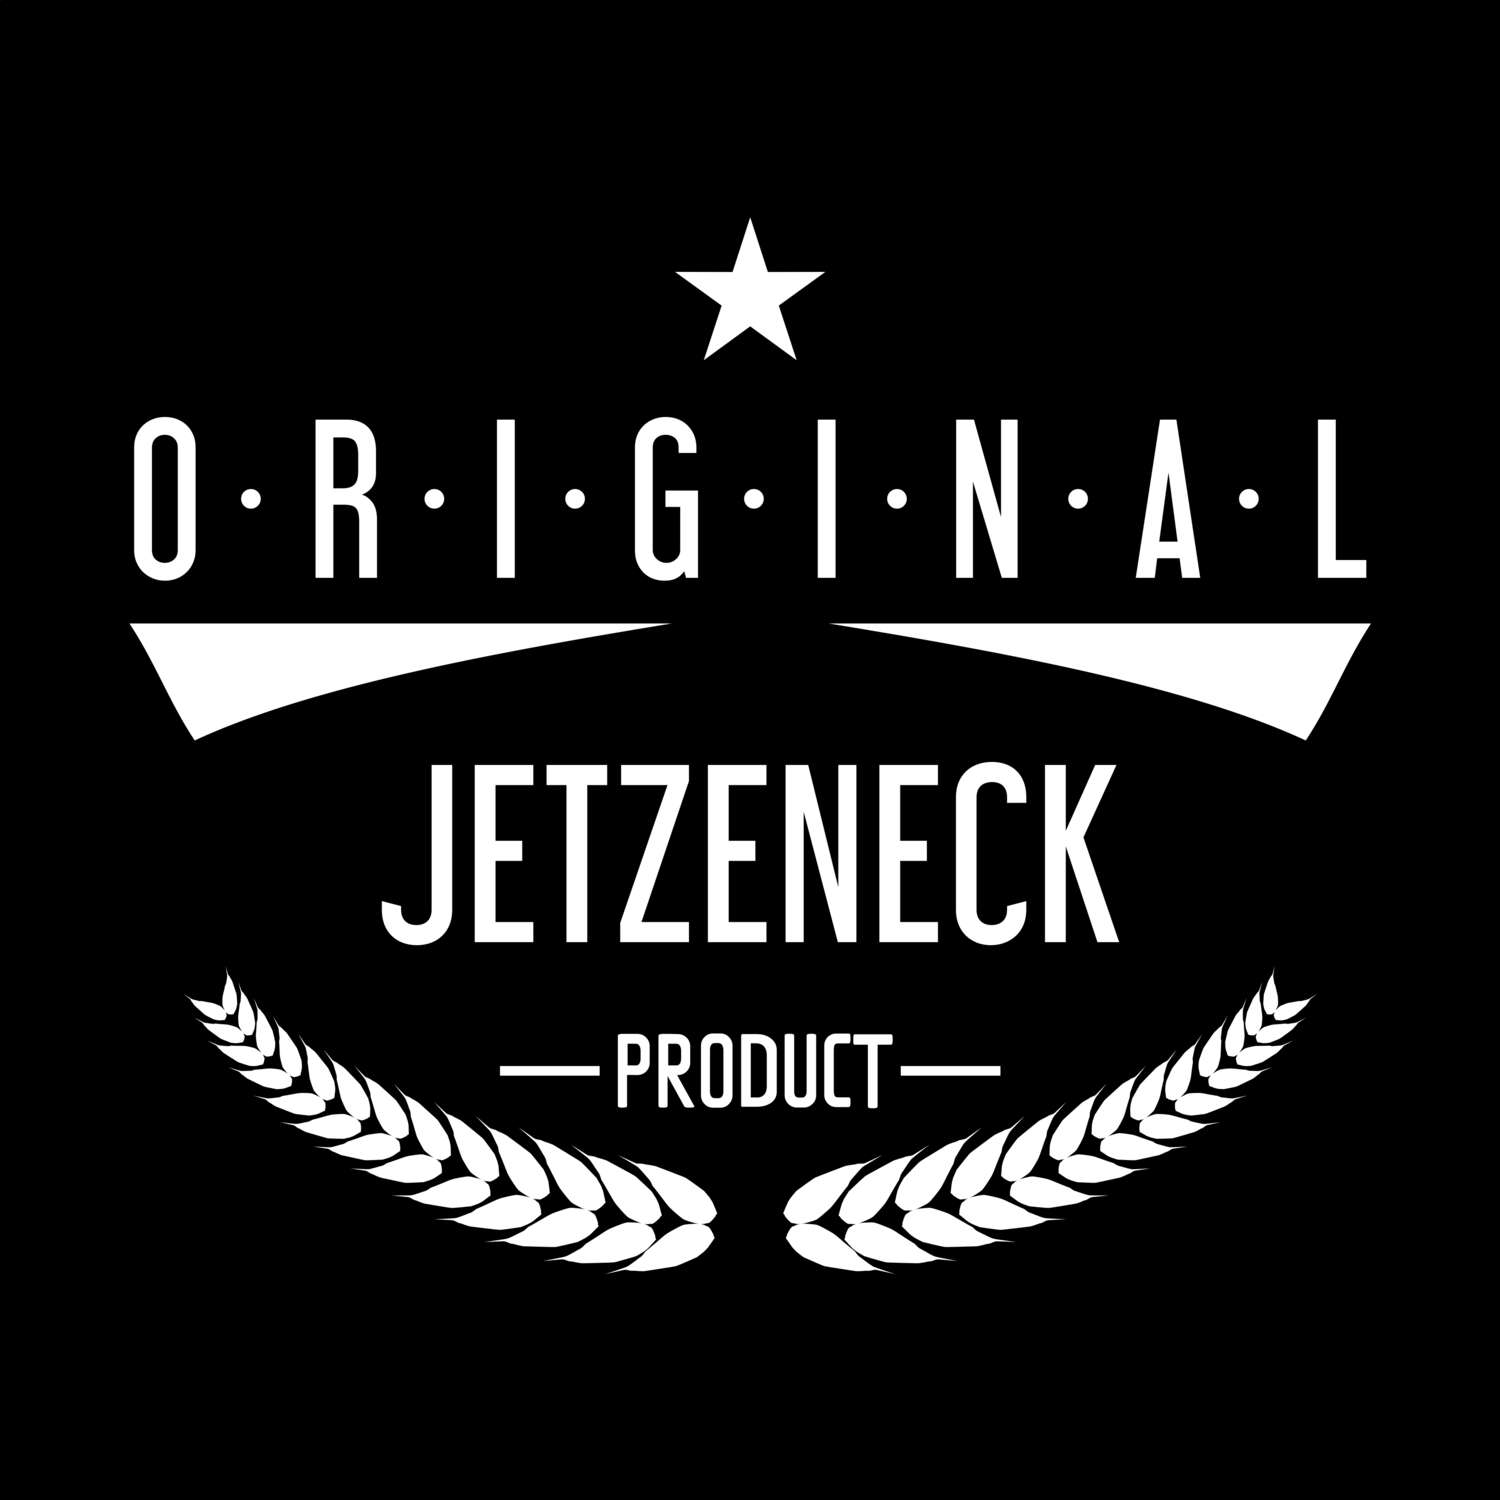 Jetzeneck T-Shirt »Original Product«